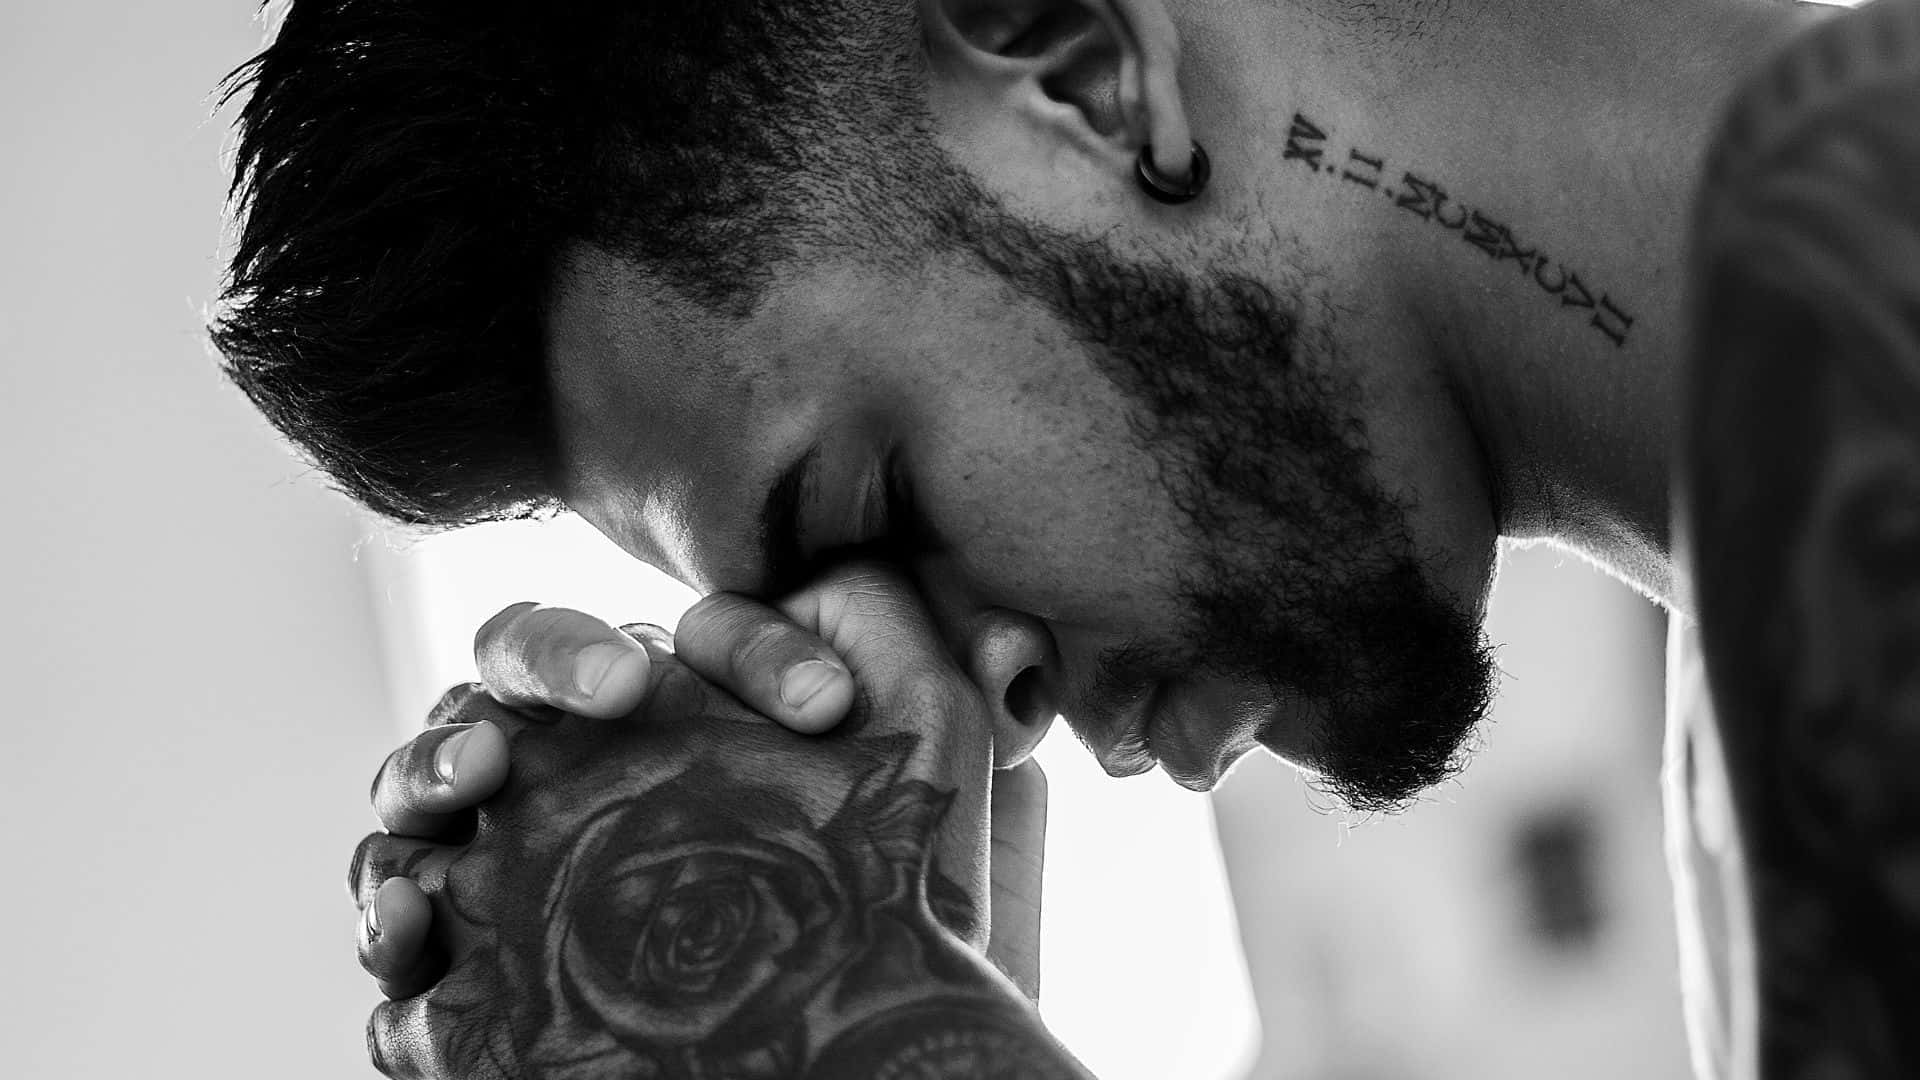 Spiritual Ink - Closeup shot of a man with hand tattoo meditating or praying. Wallpaper